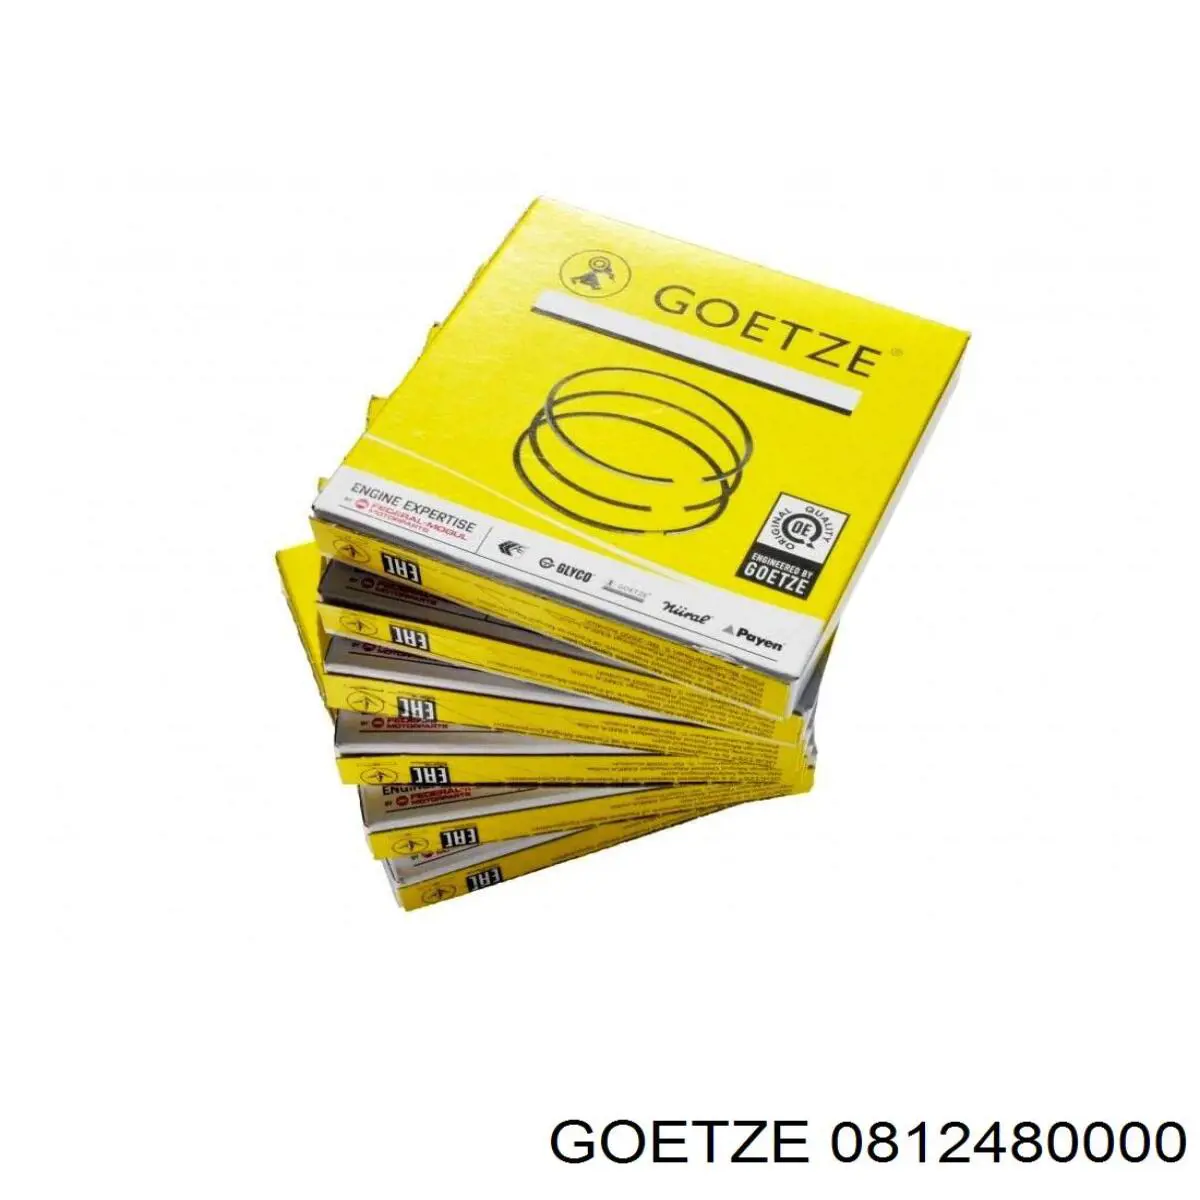 08-124800-00 Goetze kit de anéis de pistão de motor, std.